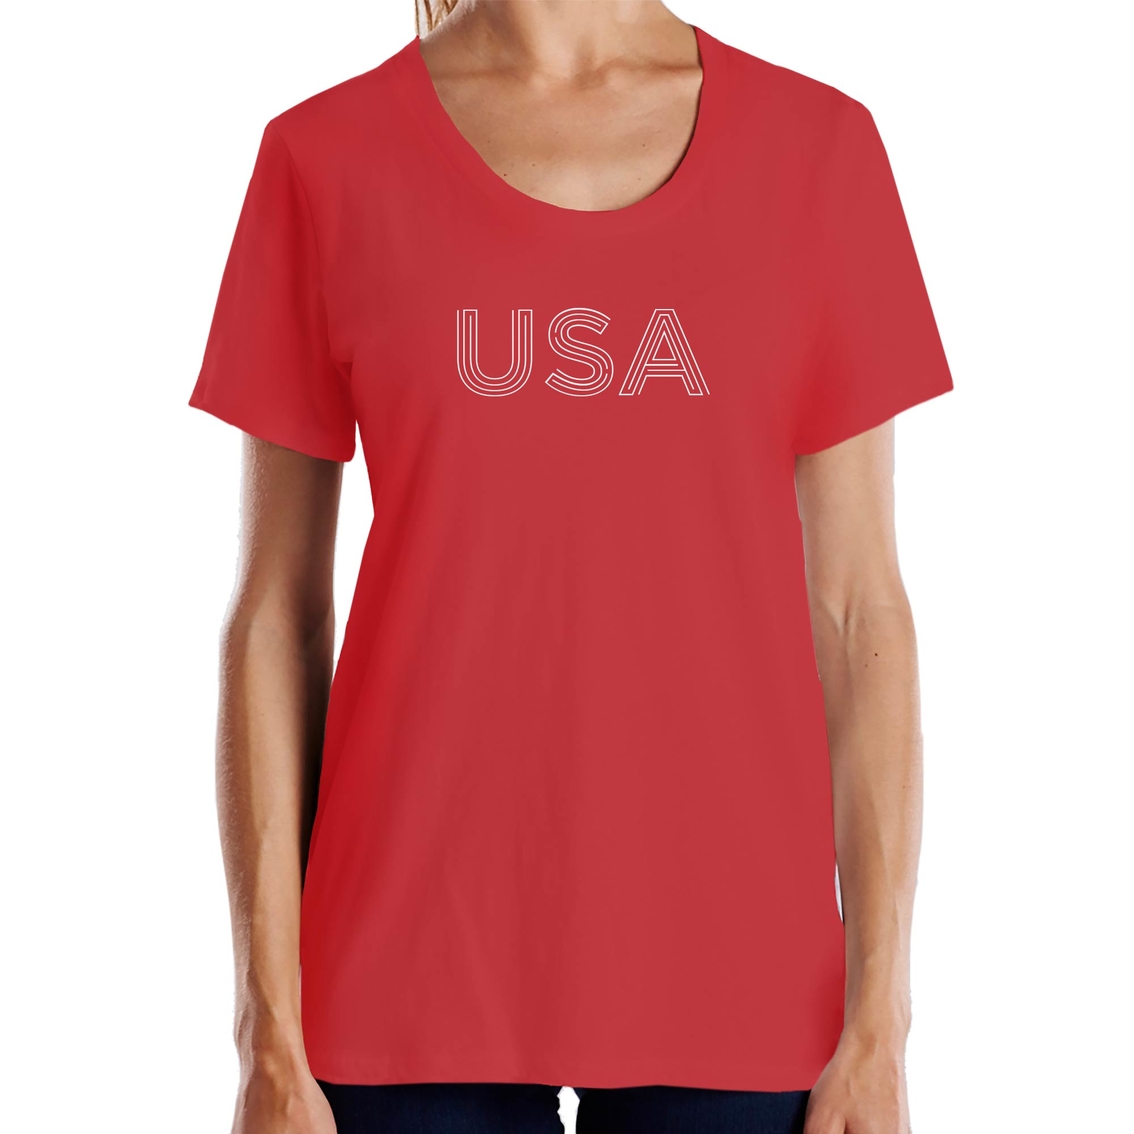 american exchange shirts